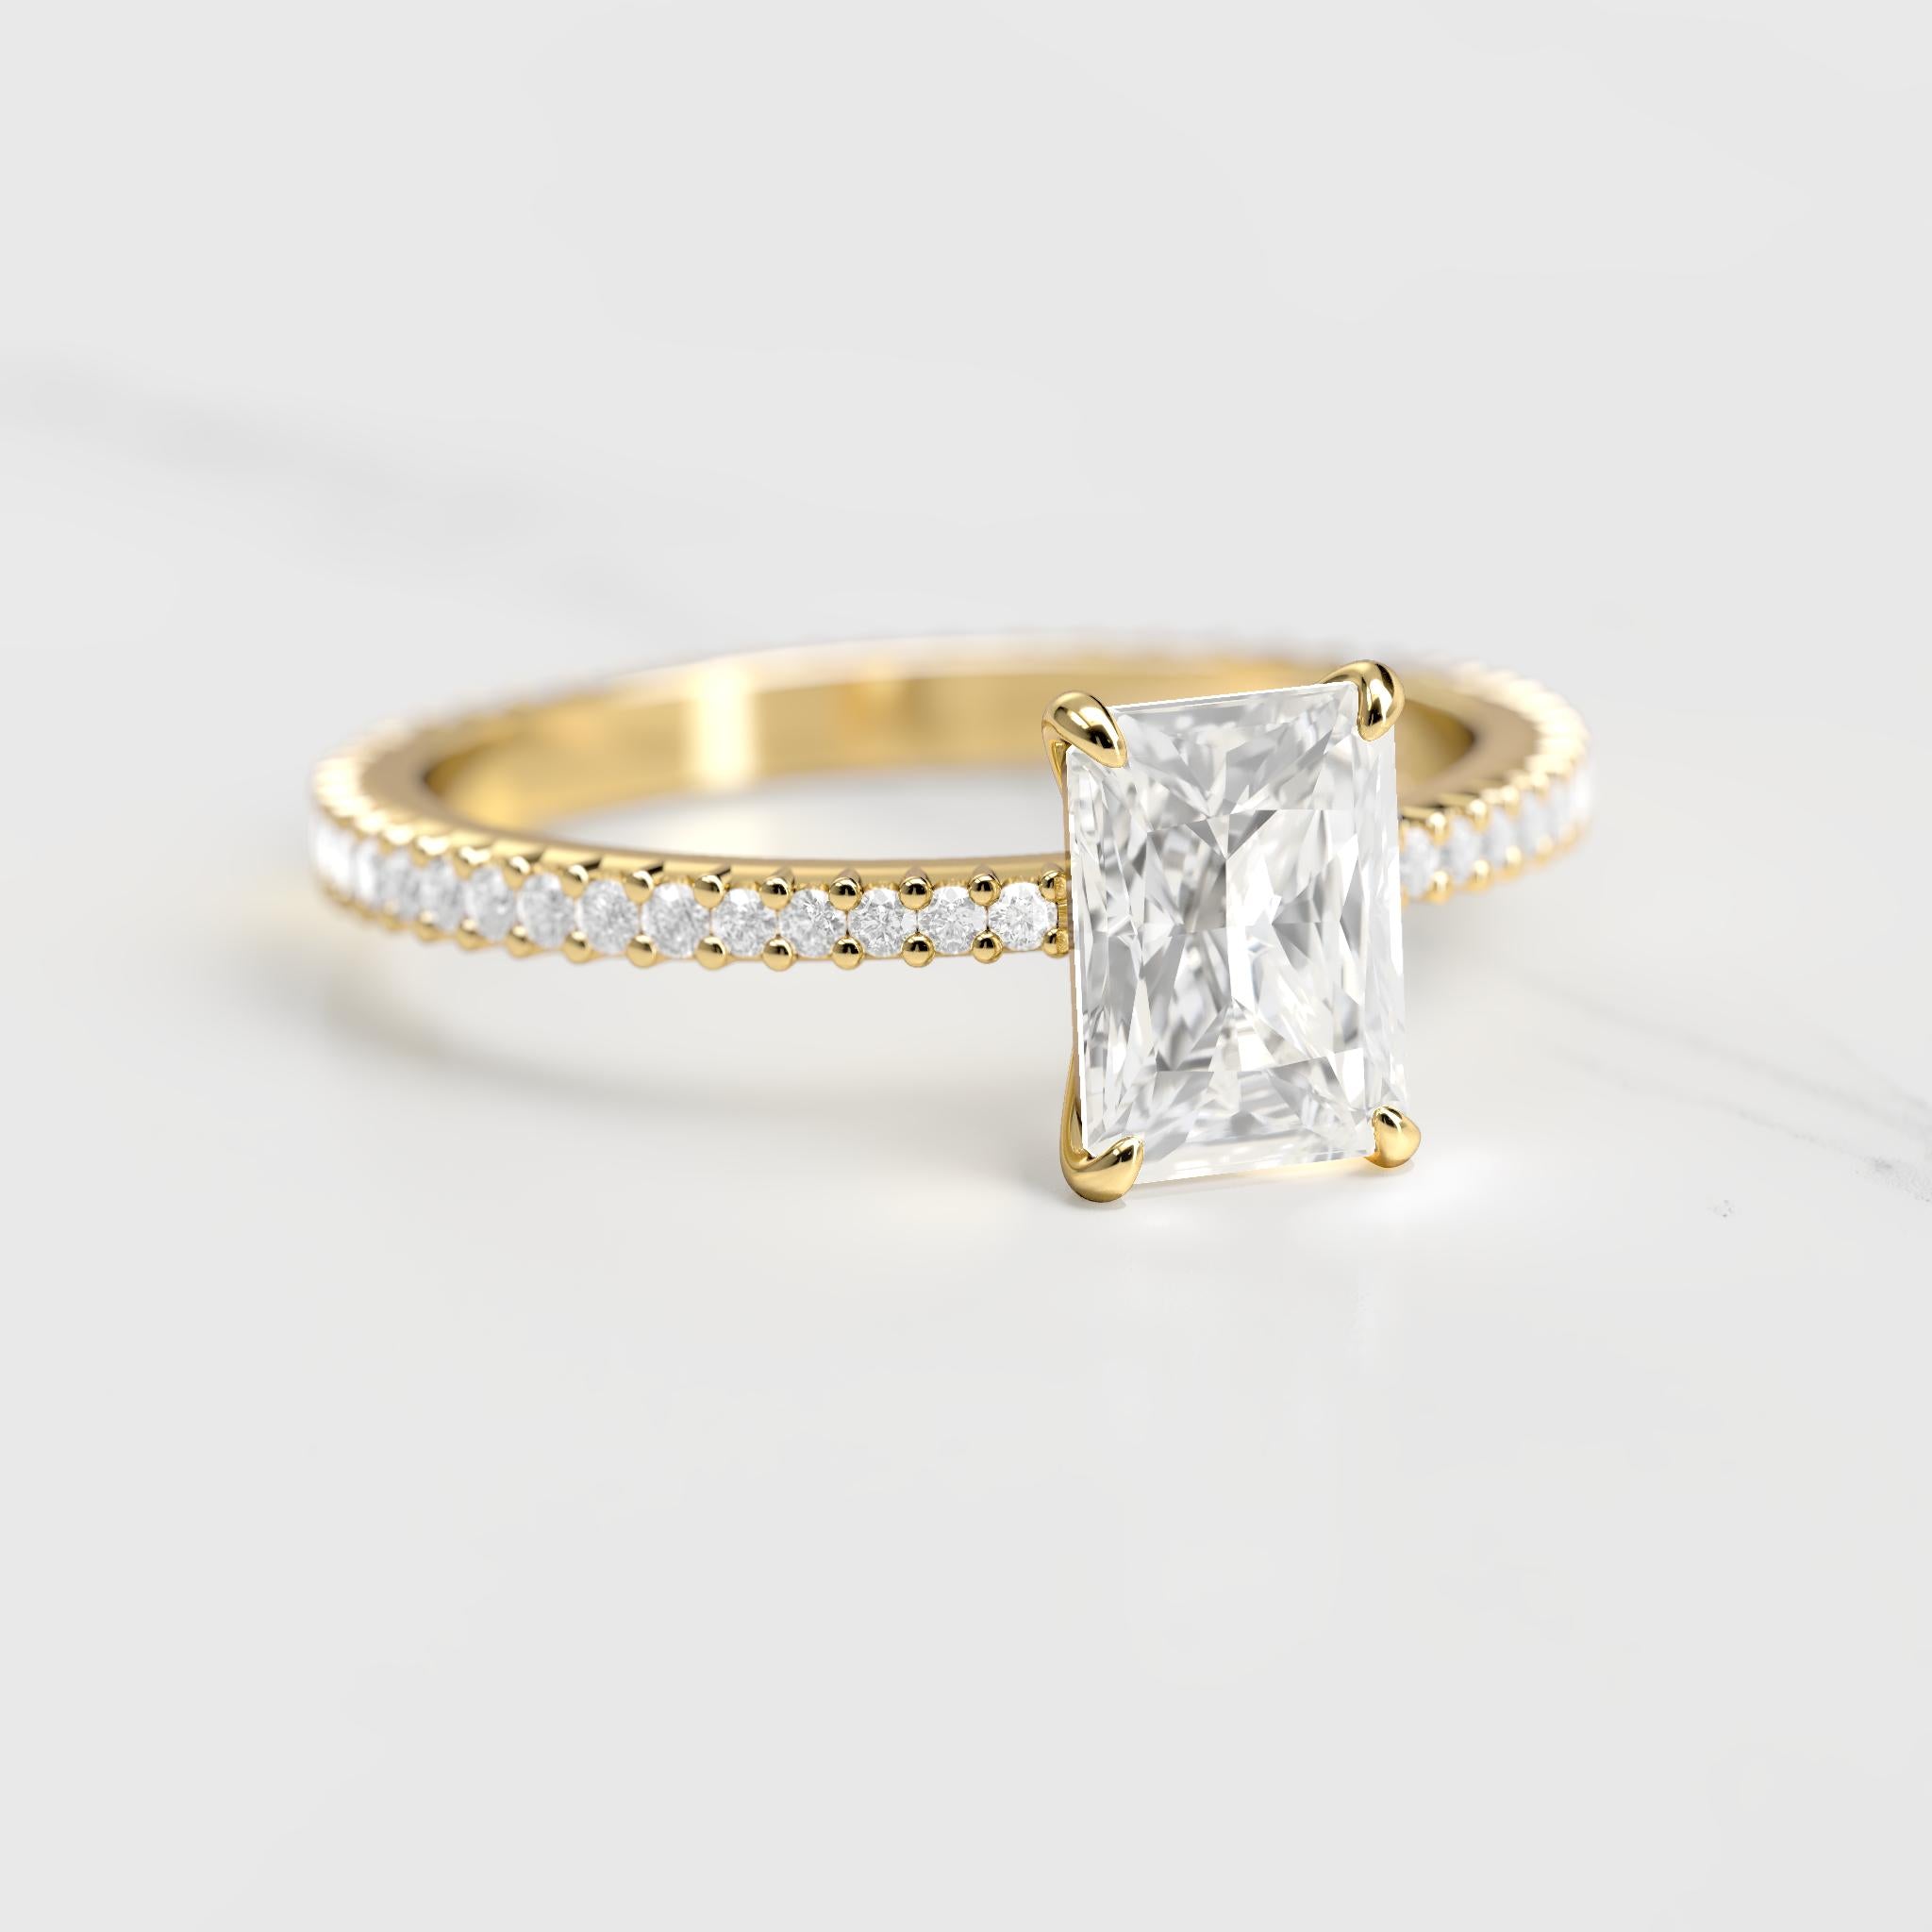 RADIANT FULL PAVE TAPERED DIAMOND RING - 14k white gold / 0.3ct / natural diamond